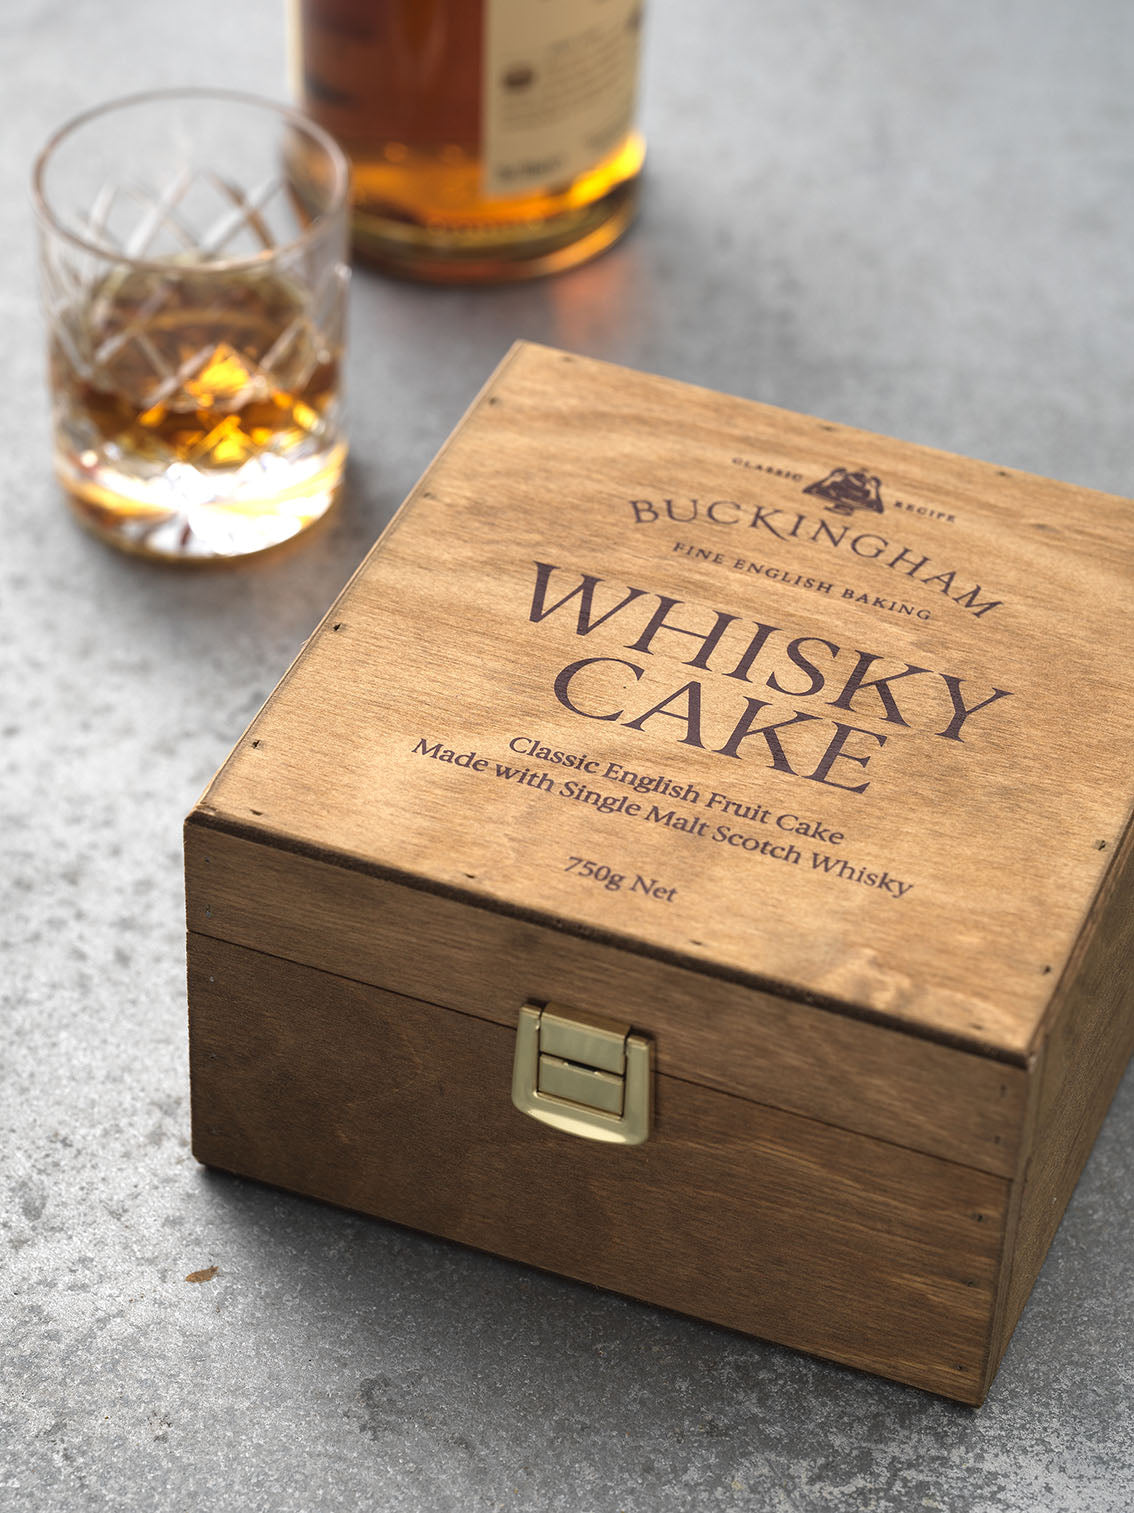 Whisky Cake in Wooden Gift Box 750g